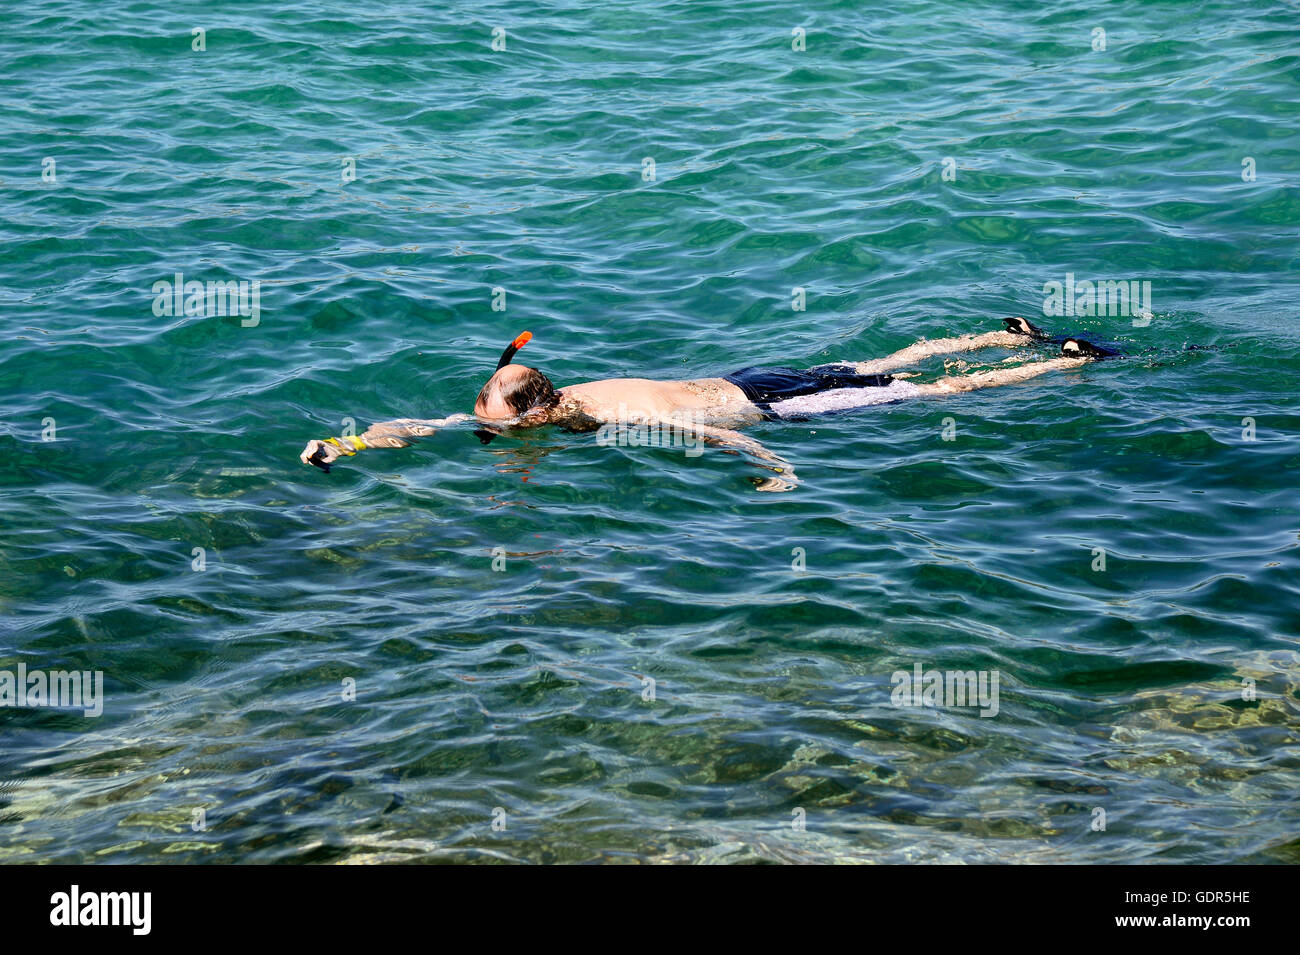 Man snorkelling in mediterranean sea Stock Photo